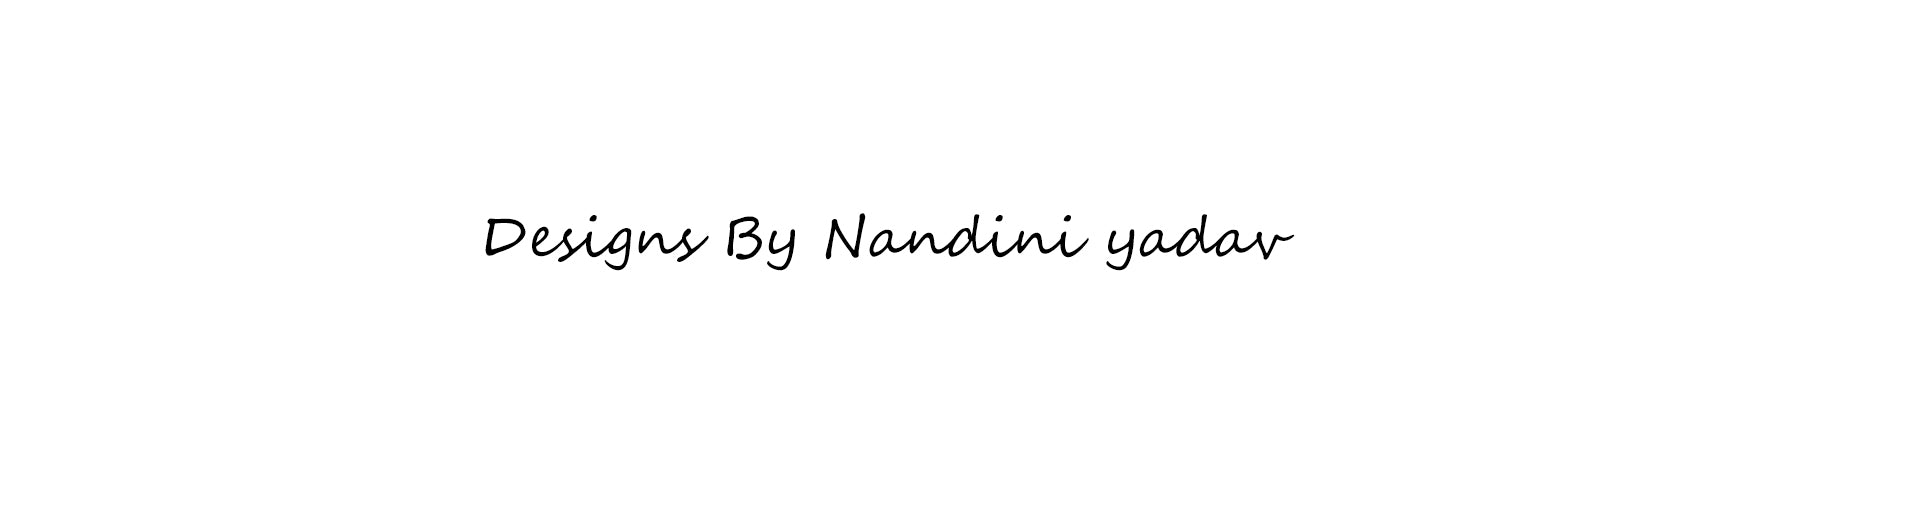 Nandini yadav